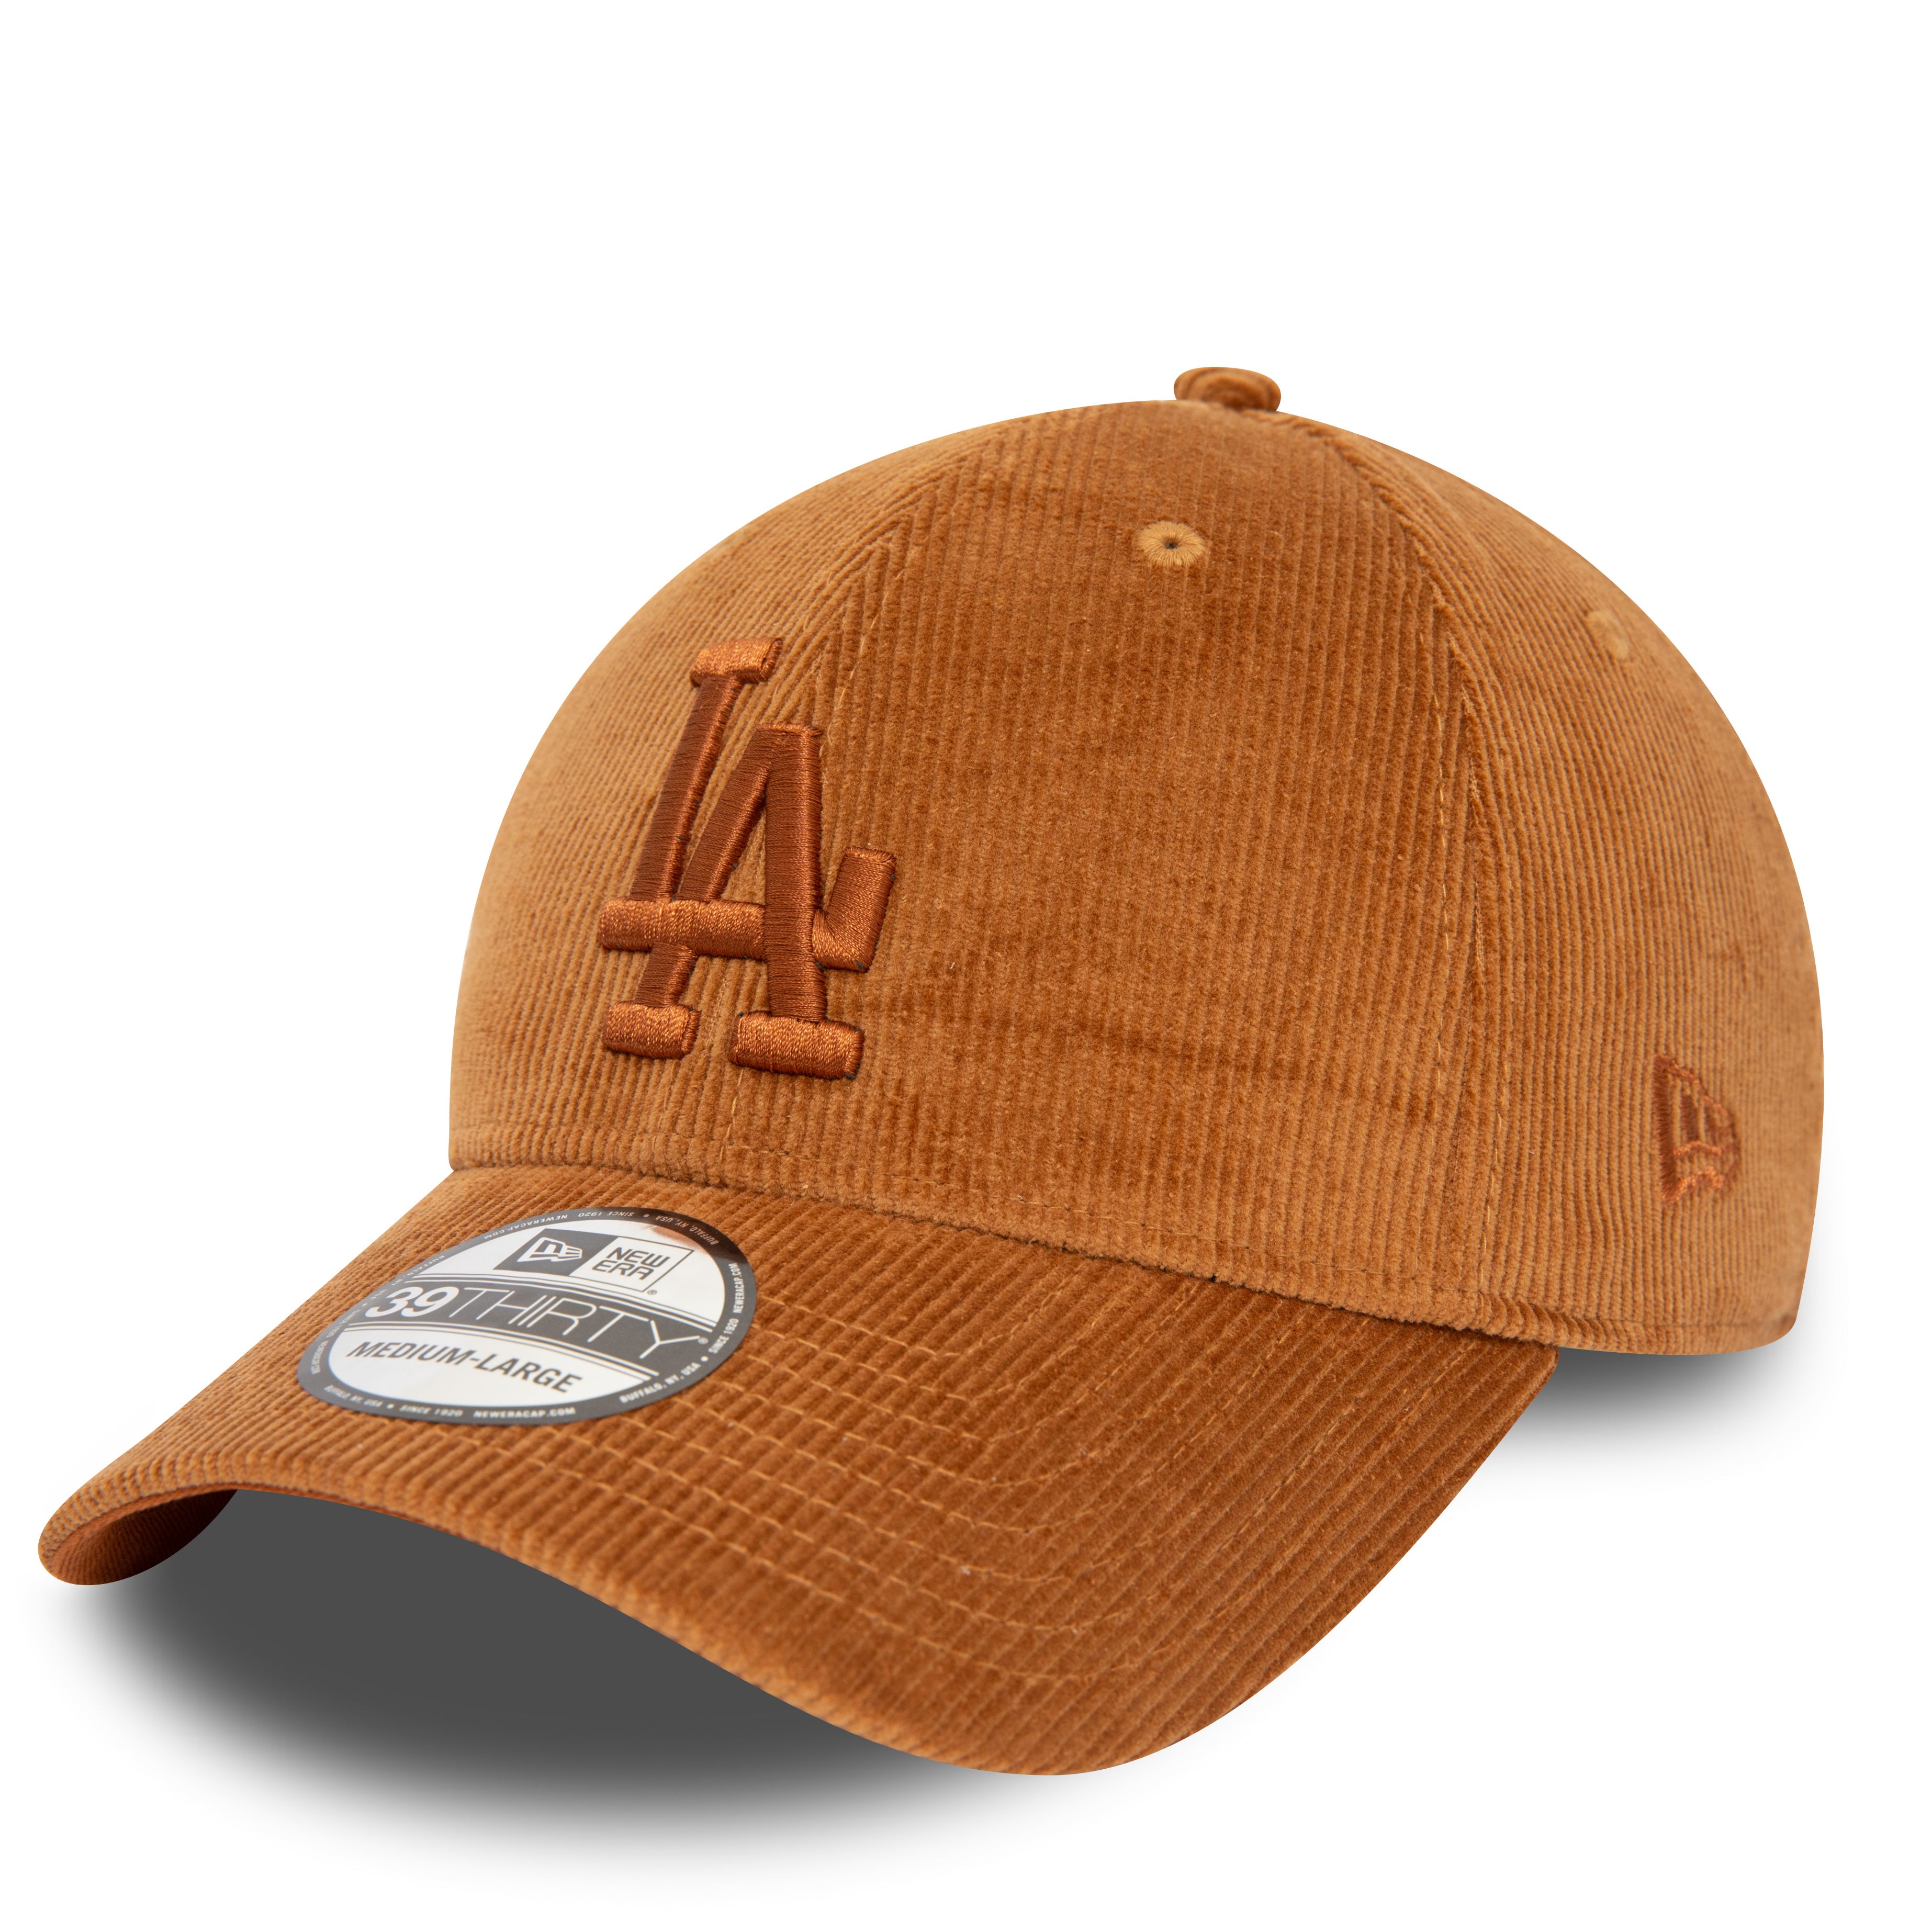 NEW ERA 39THIRTY CORD LOS ANGELES DODGERS BROWN CAP